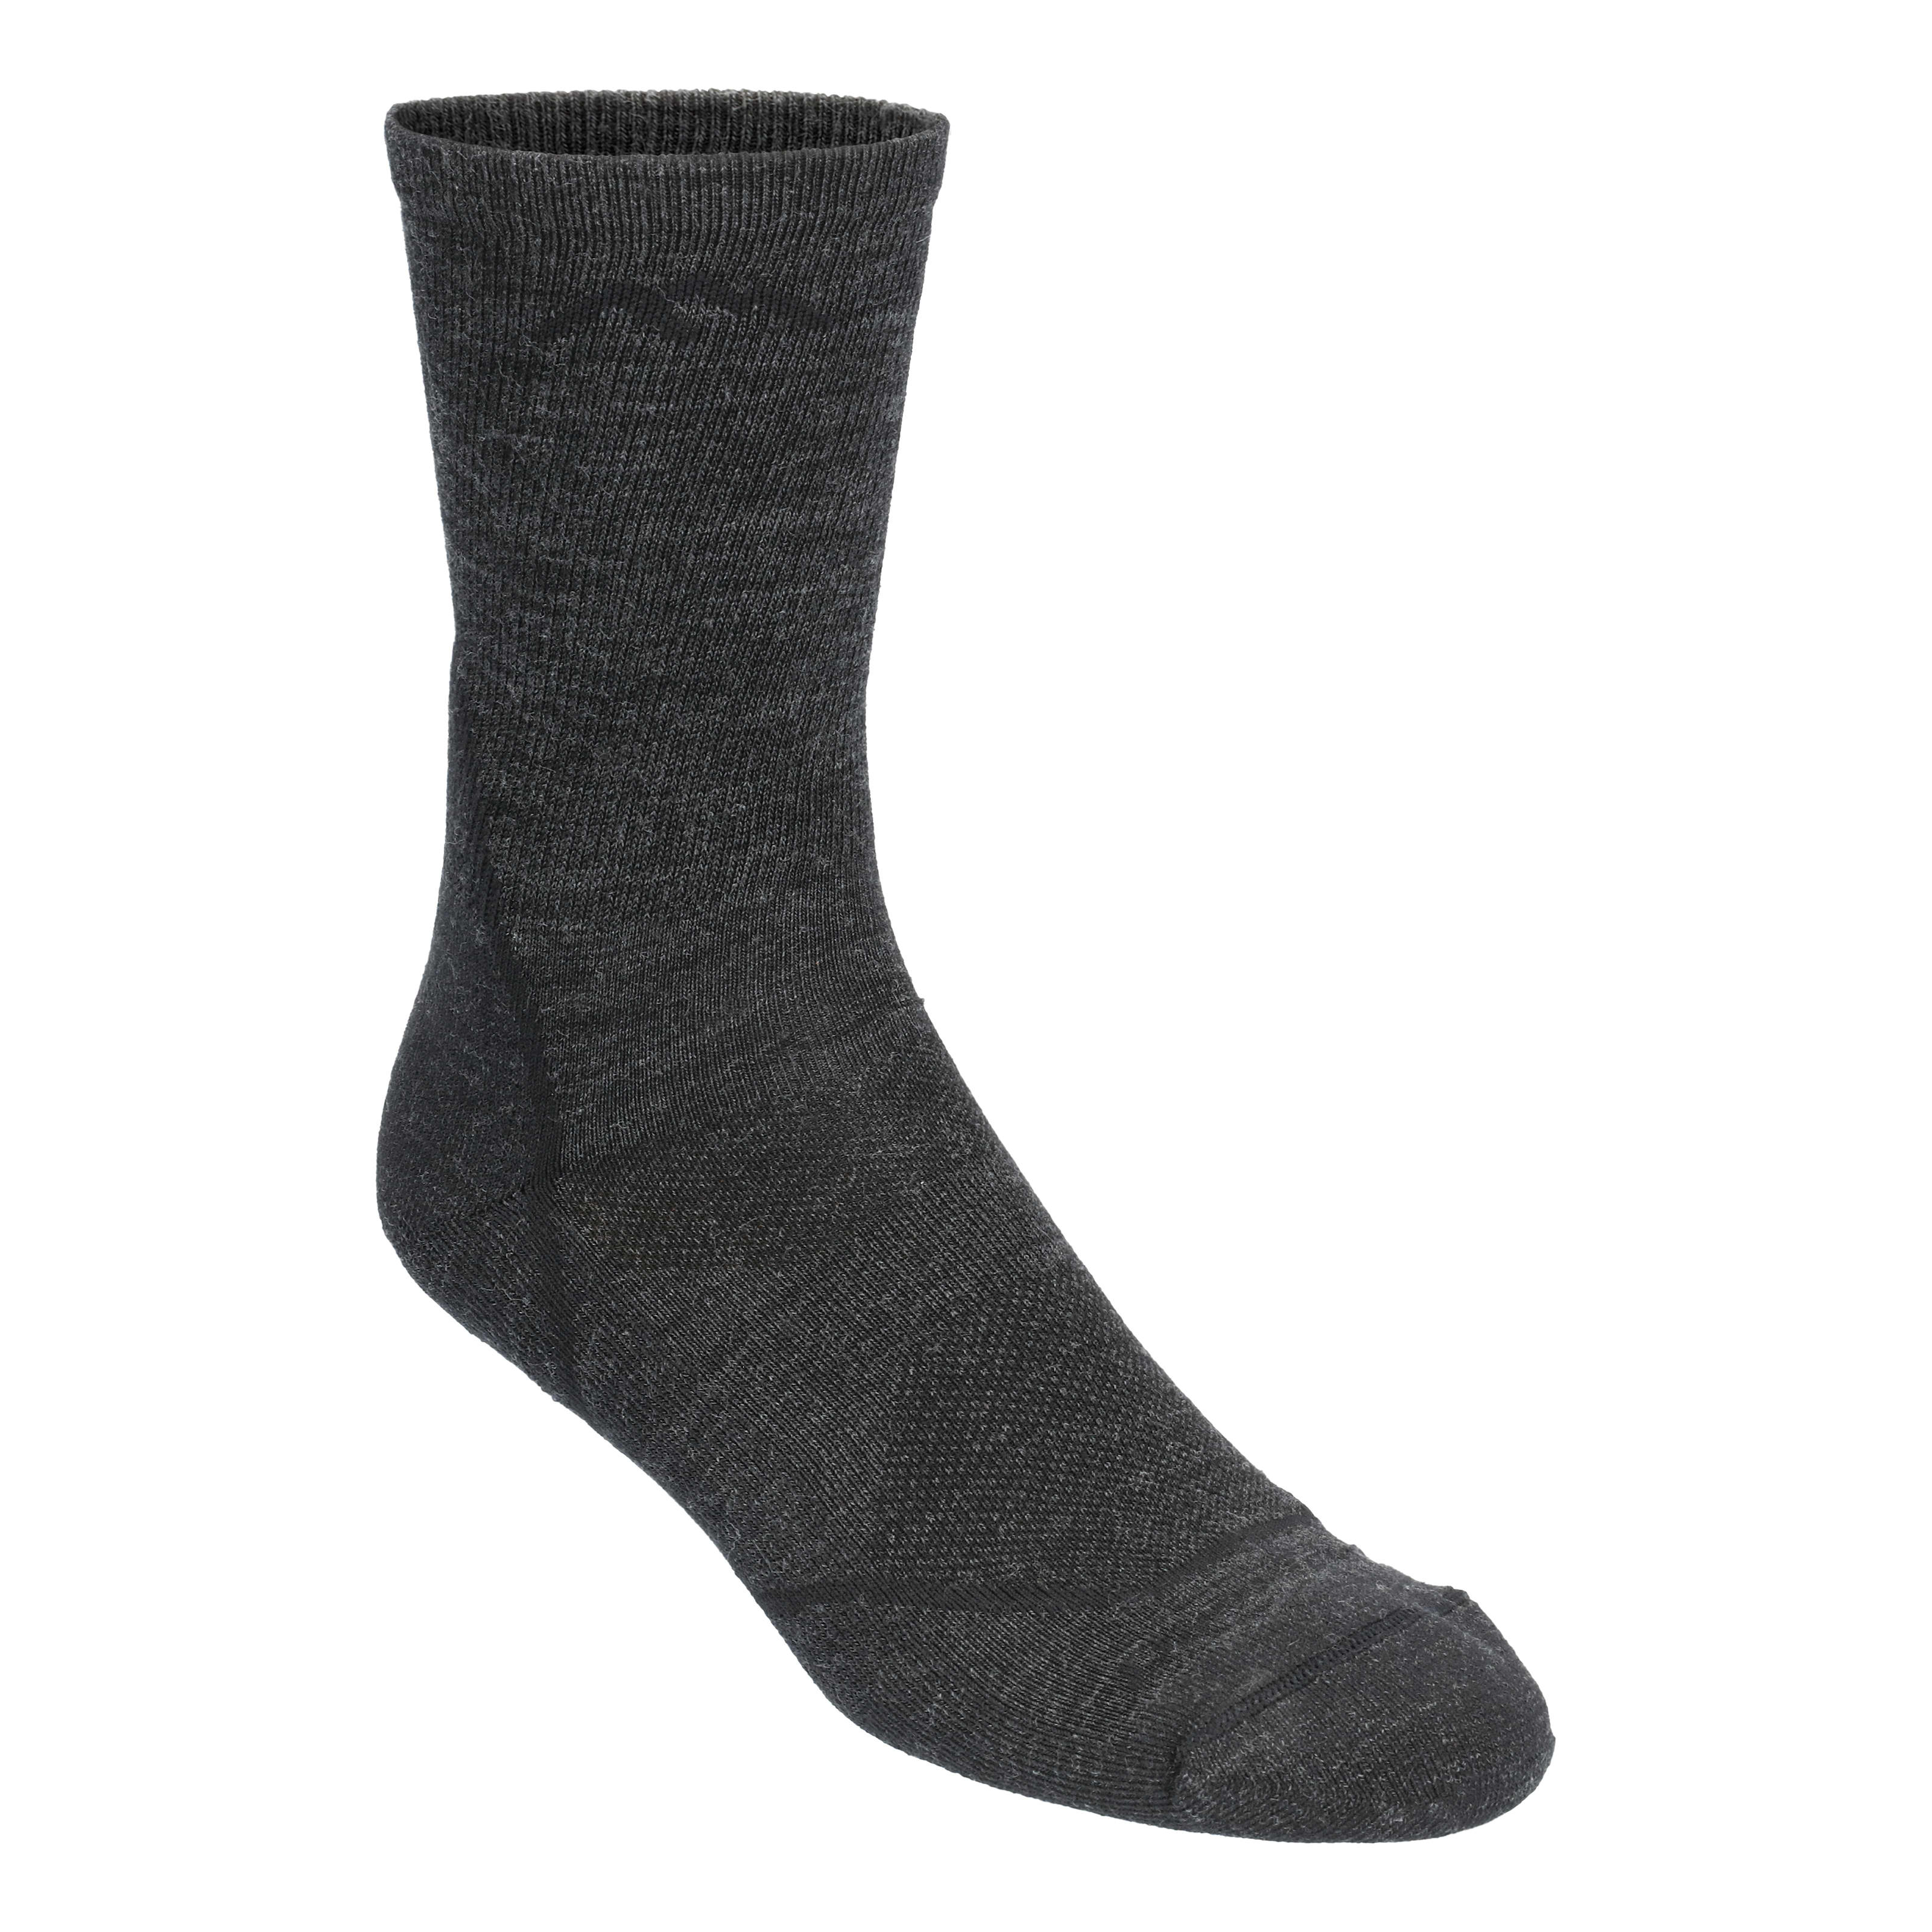 Darn Tough® Men's Light Hiker Merino Wool Crew Socks - Black